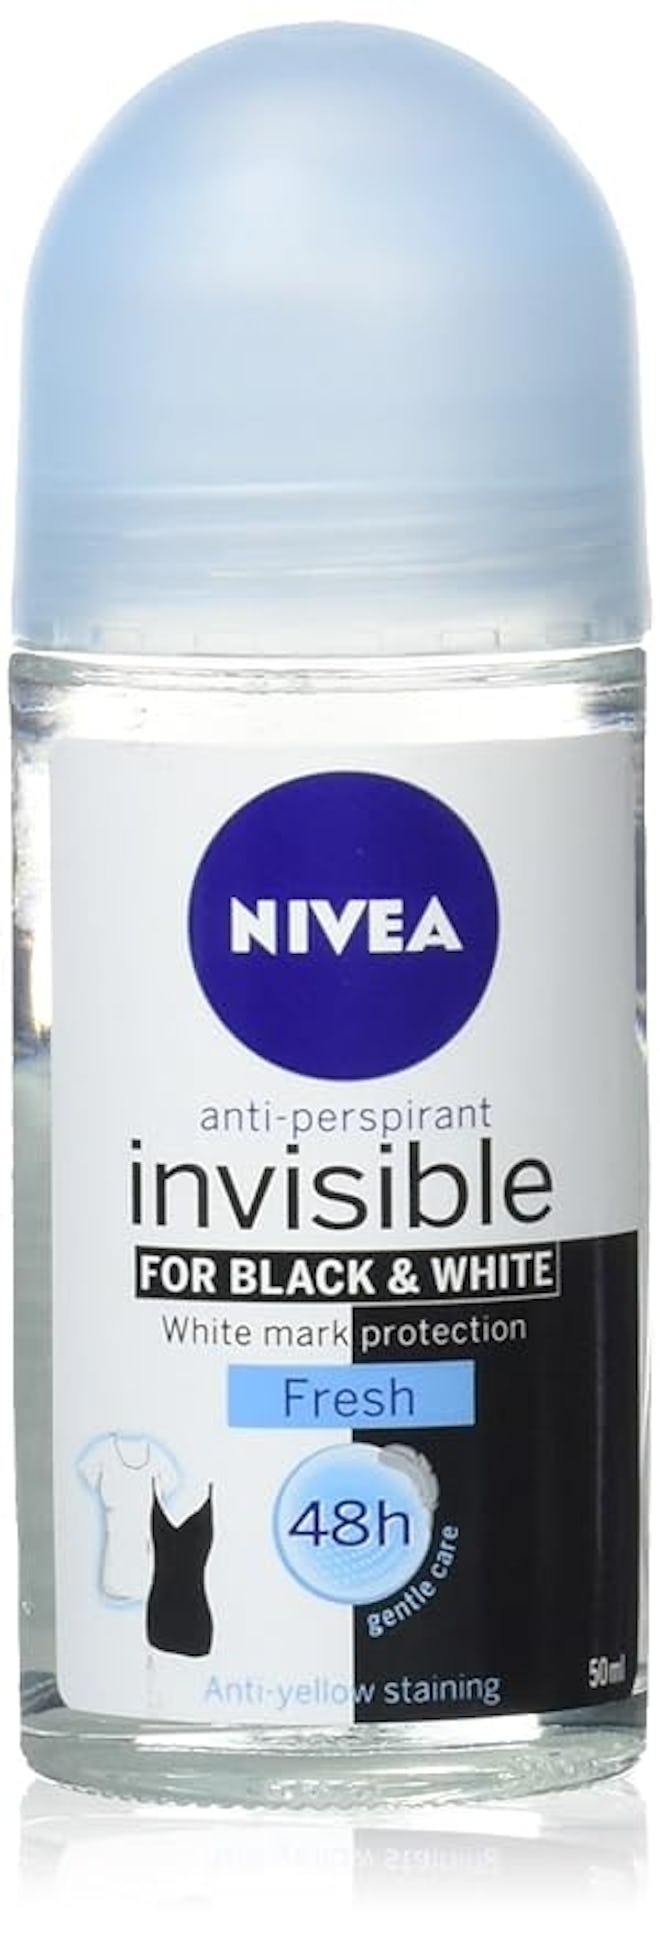 Nivea Inenvisible Roll-On Deodorant 